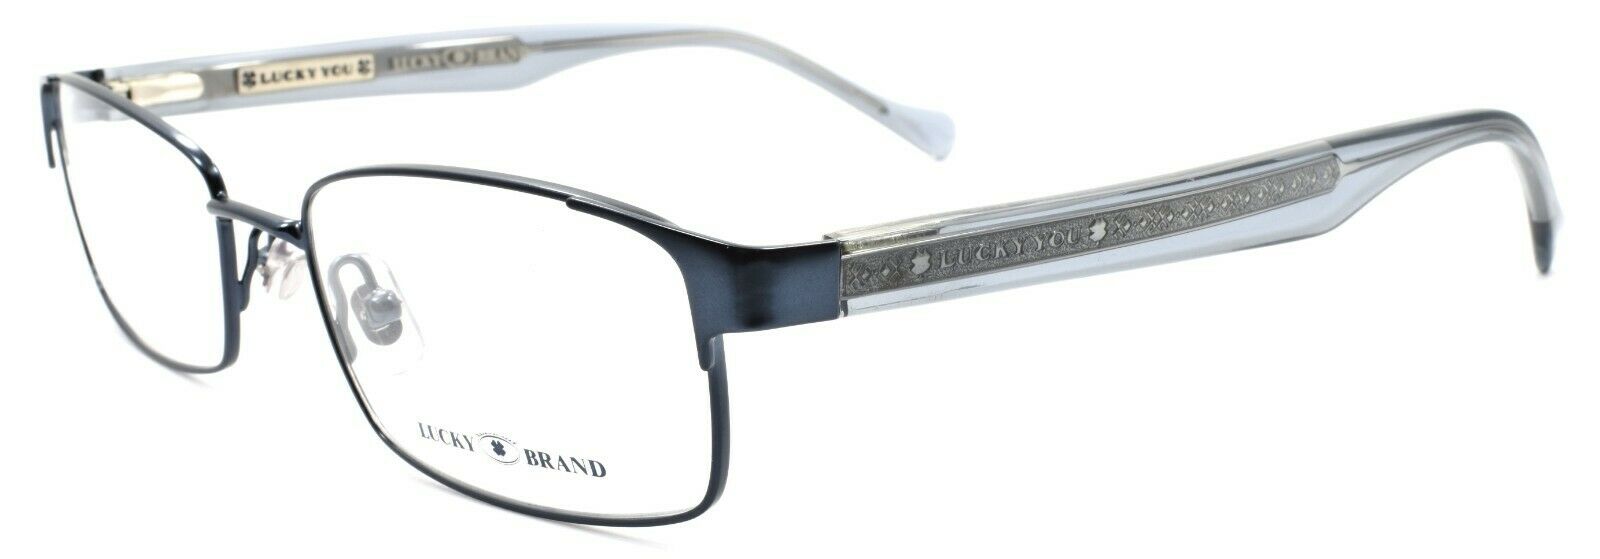 1-LUCKY BRAND Maxwell Men's Eyeglasses Frames 51-18-140 Blue + CASE-751286137873-IKSpecs